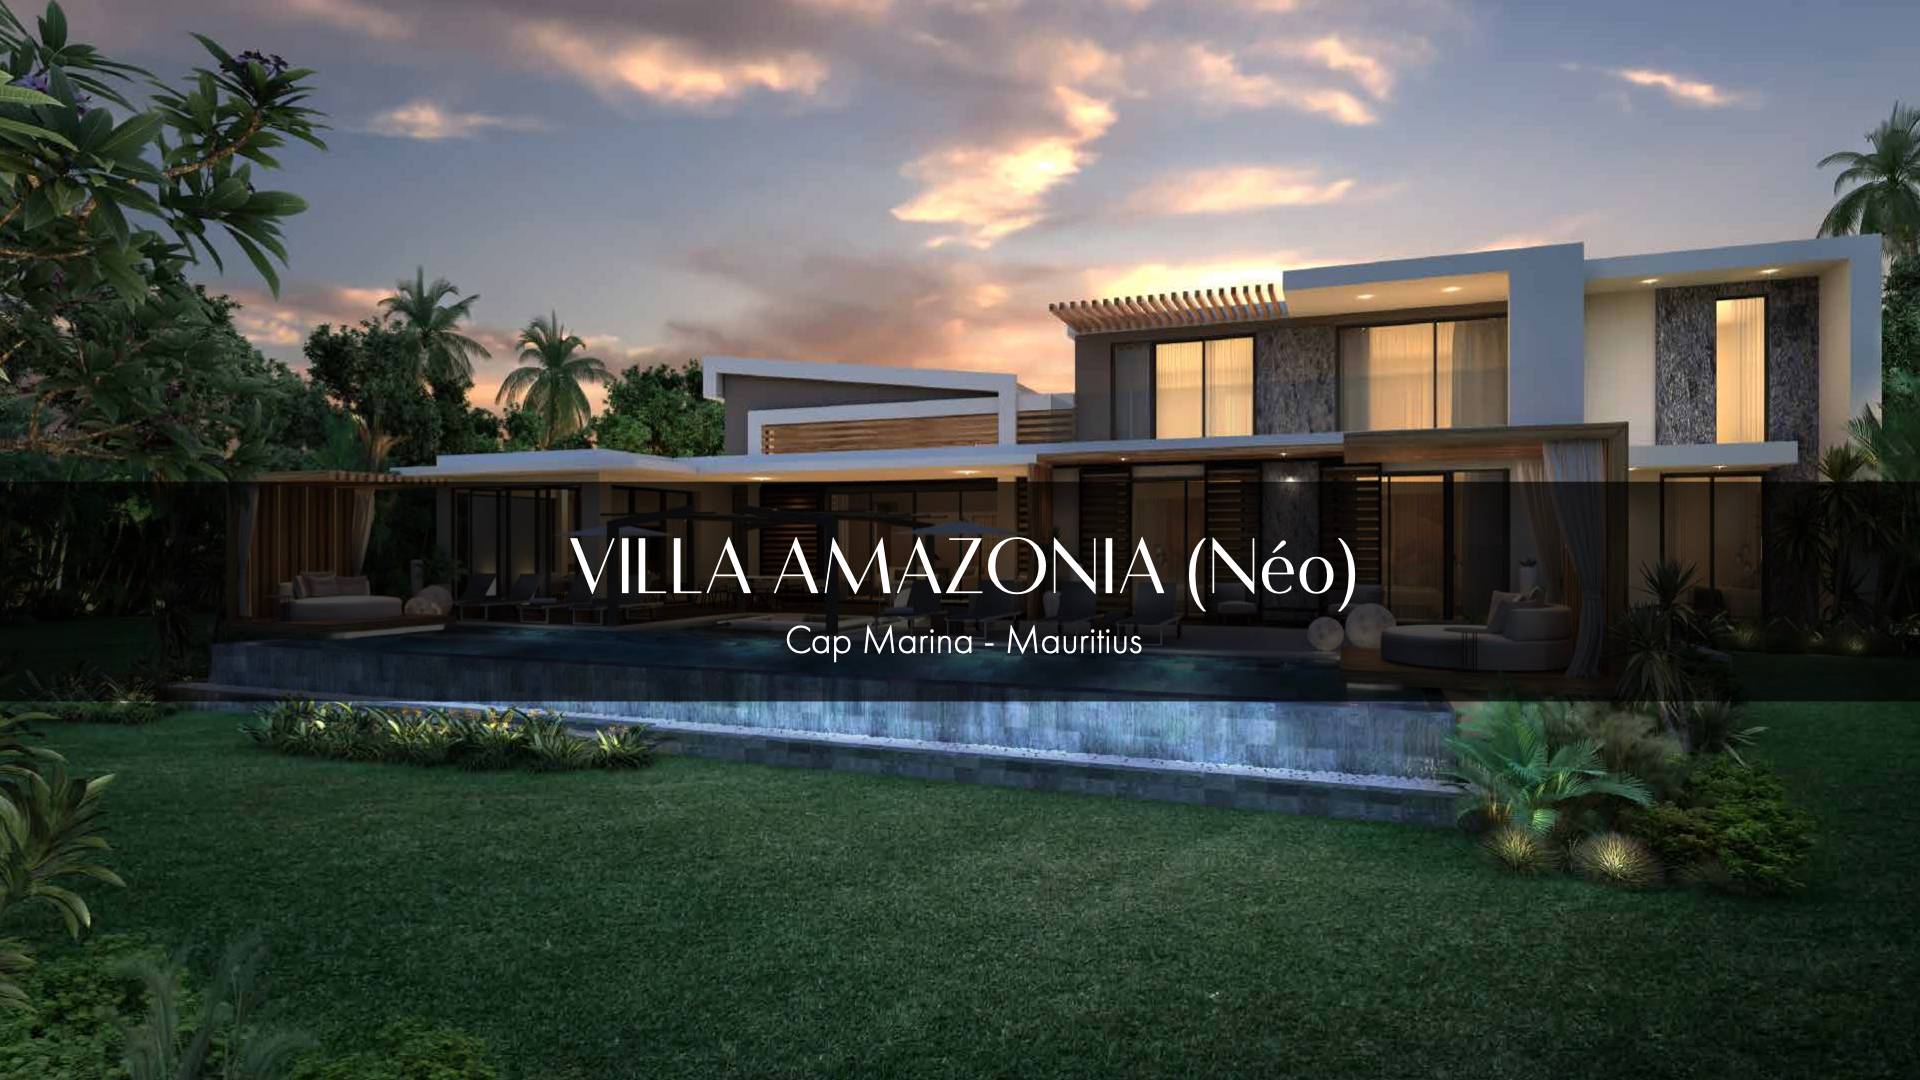 Amazonia Neo Villas: Where Tranquil Luxury Meets Timeless Elegance